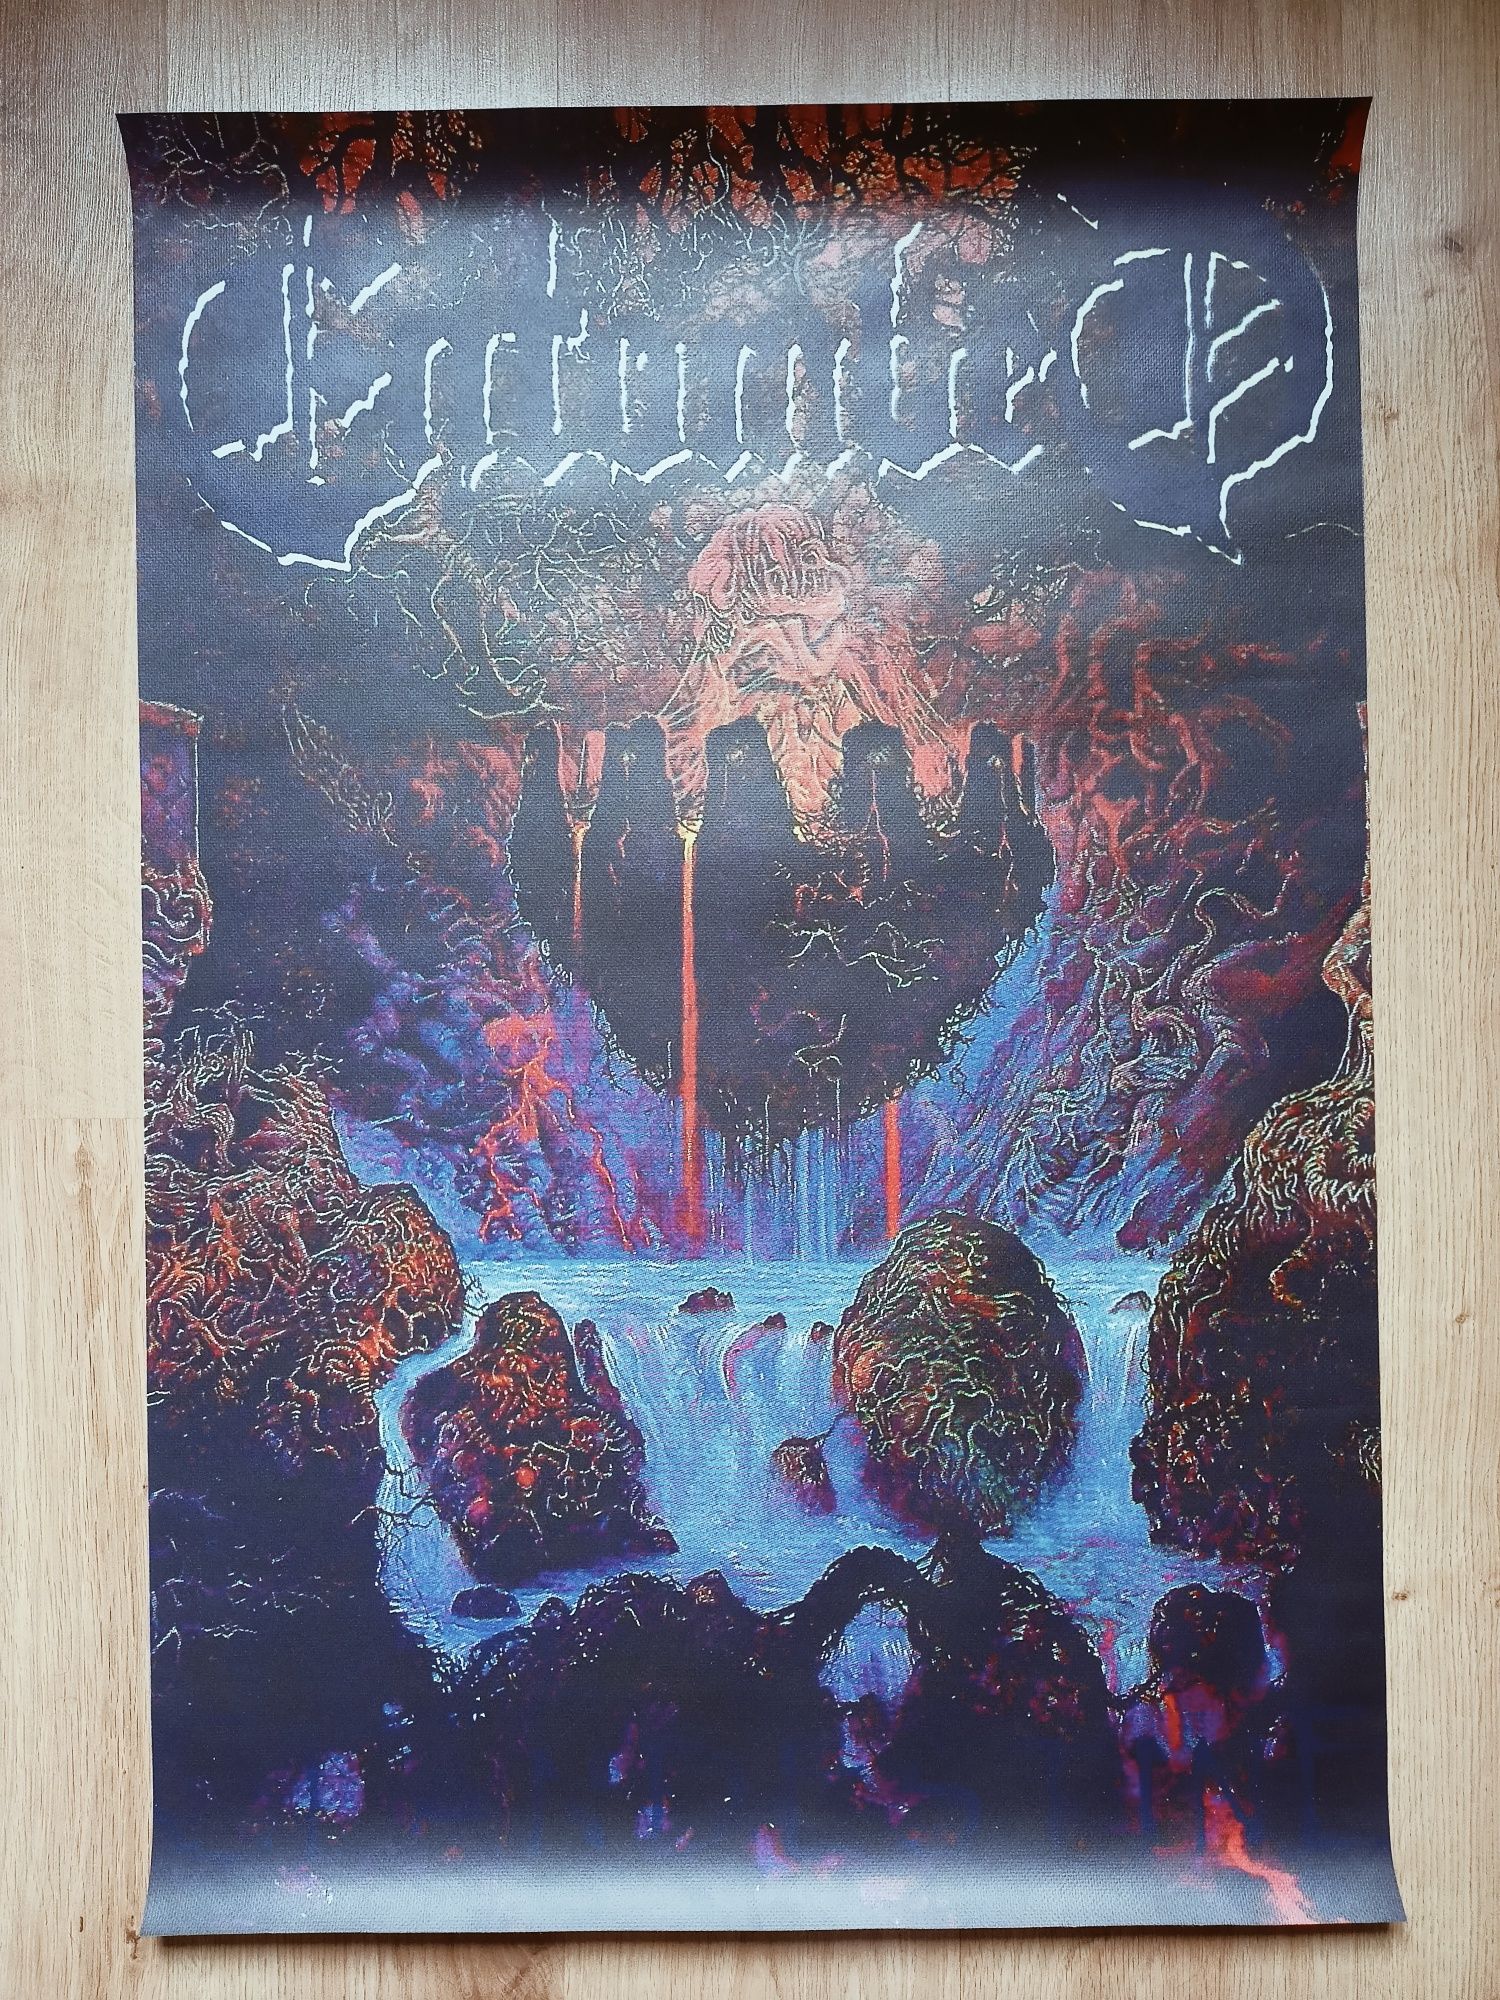 Plakat Entombed "Clandestine" Death metal